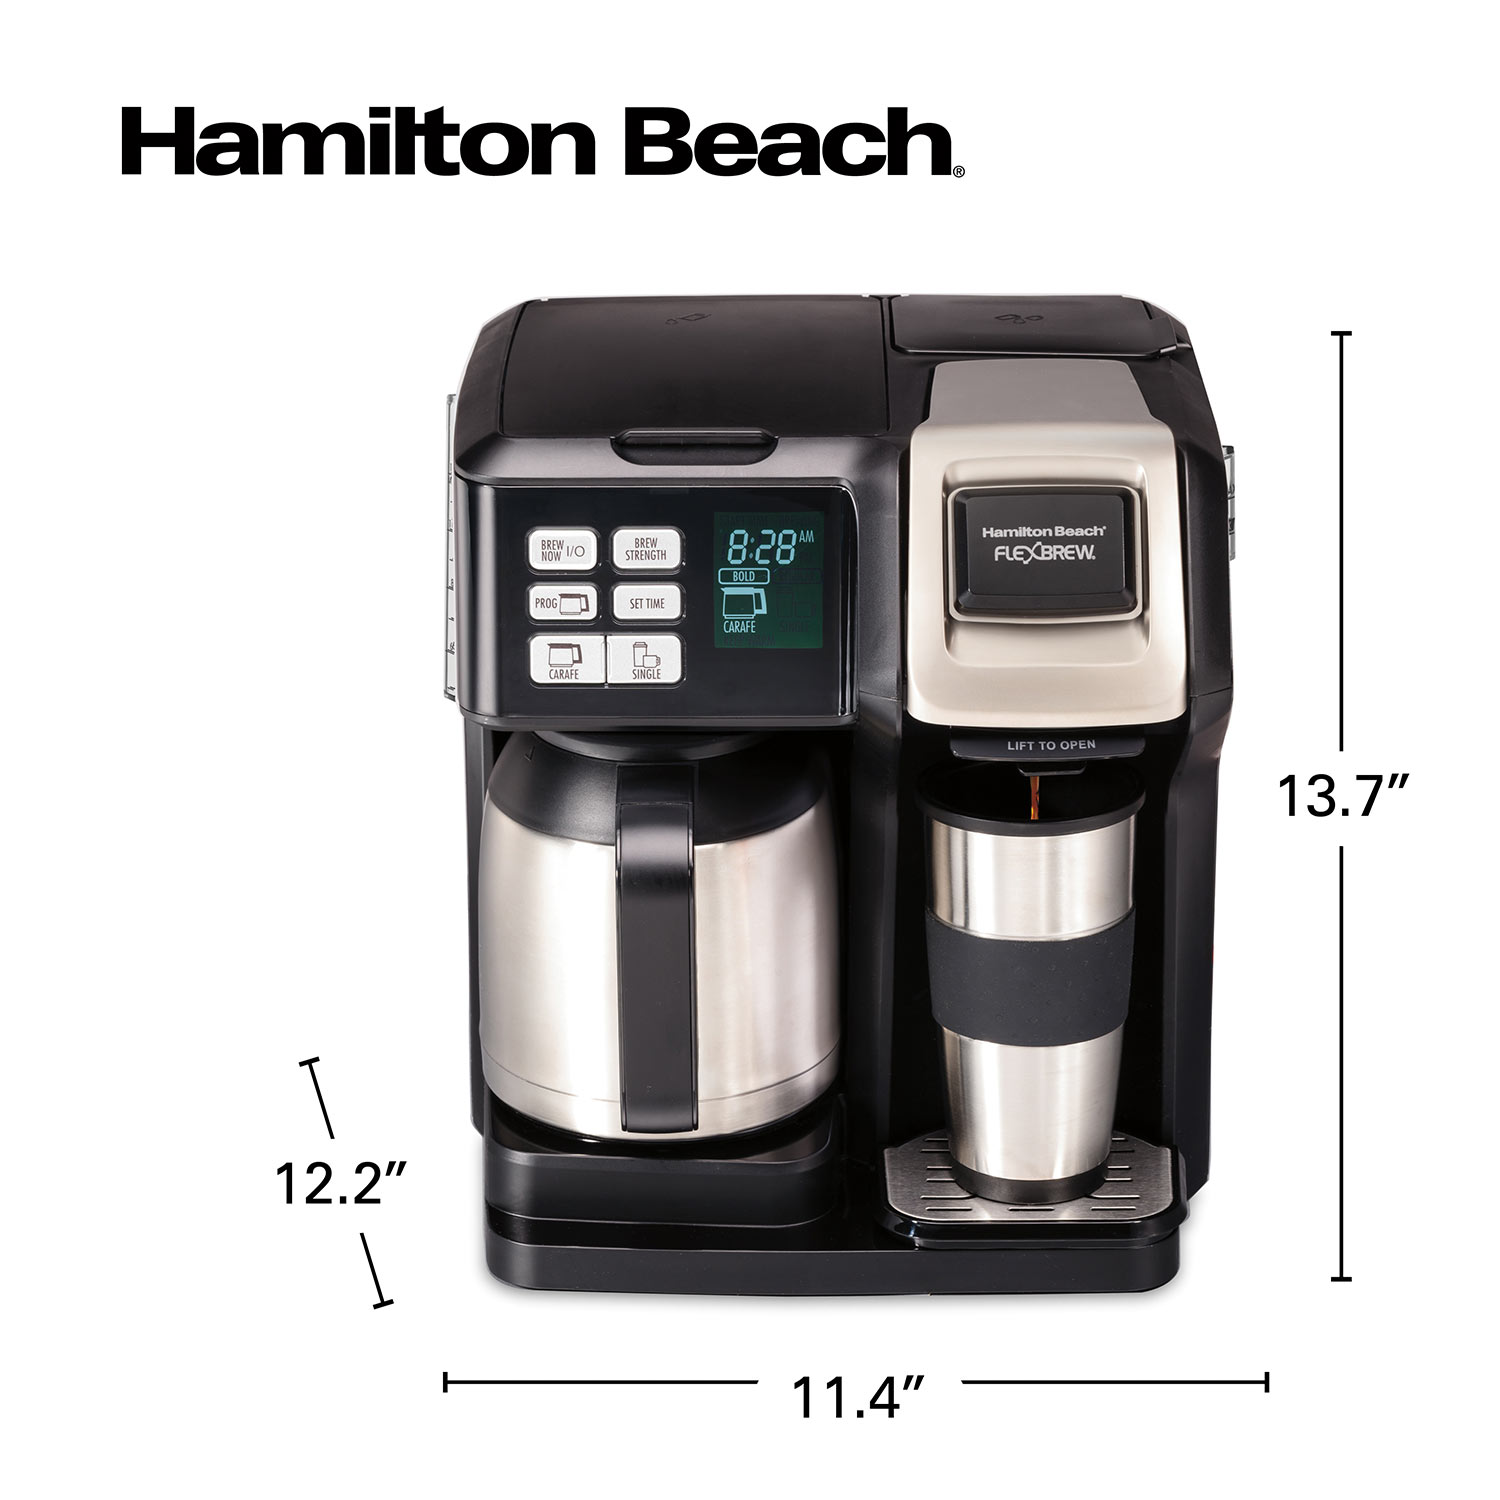 Tested Tuesday: FlexBrew 2-Way Coffee Maker by Hamilton Beach